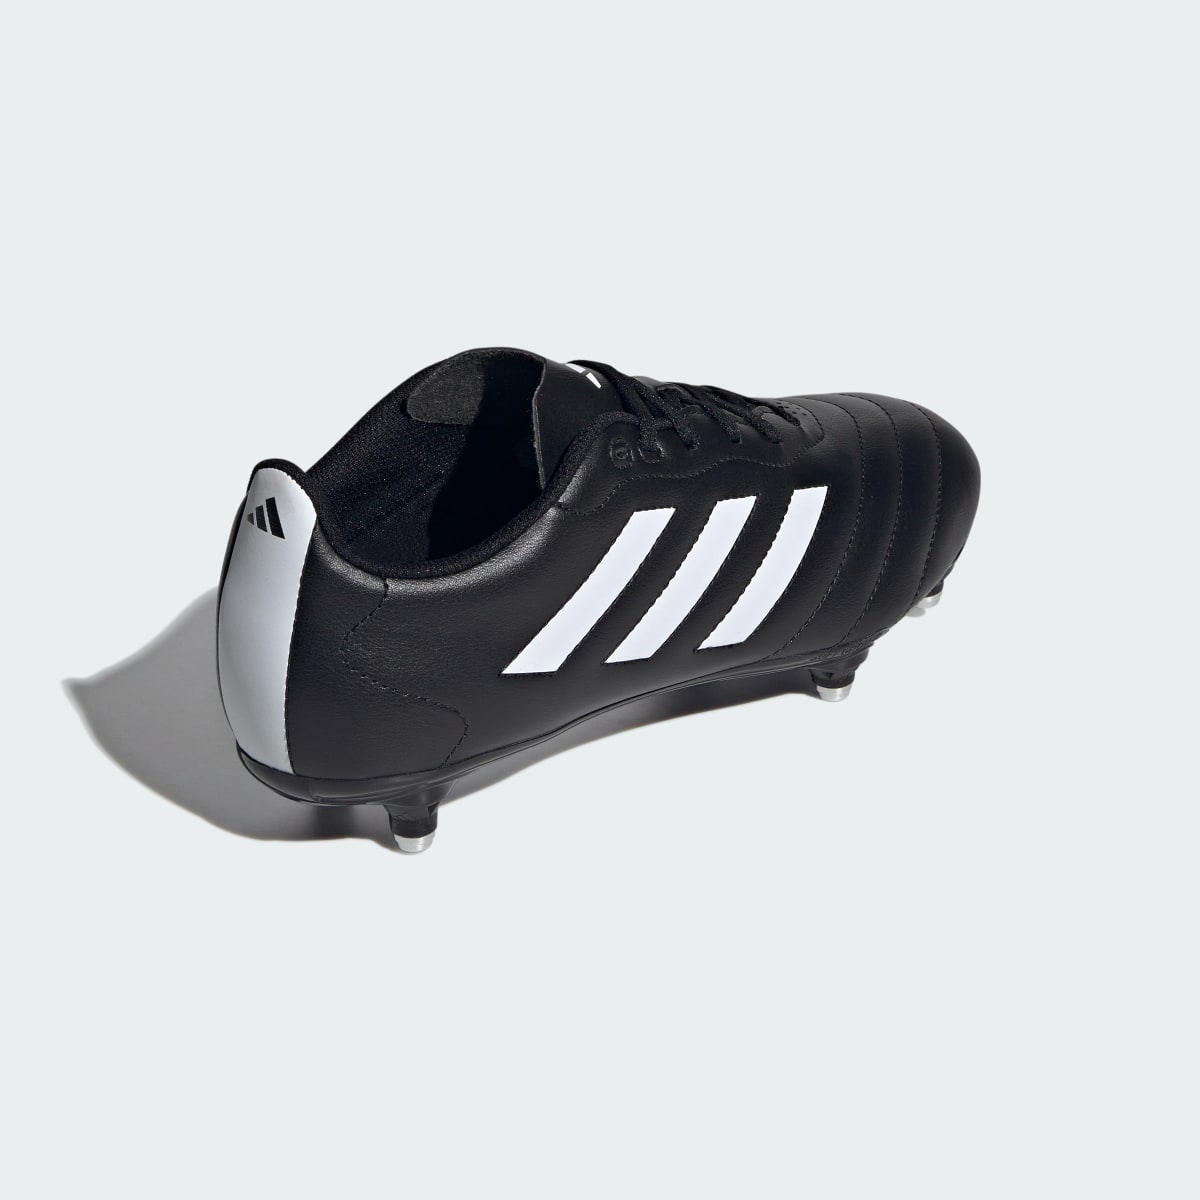 Adidas Goletto VIII Soft Ground Boots. 5